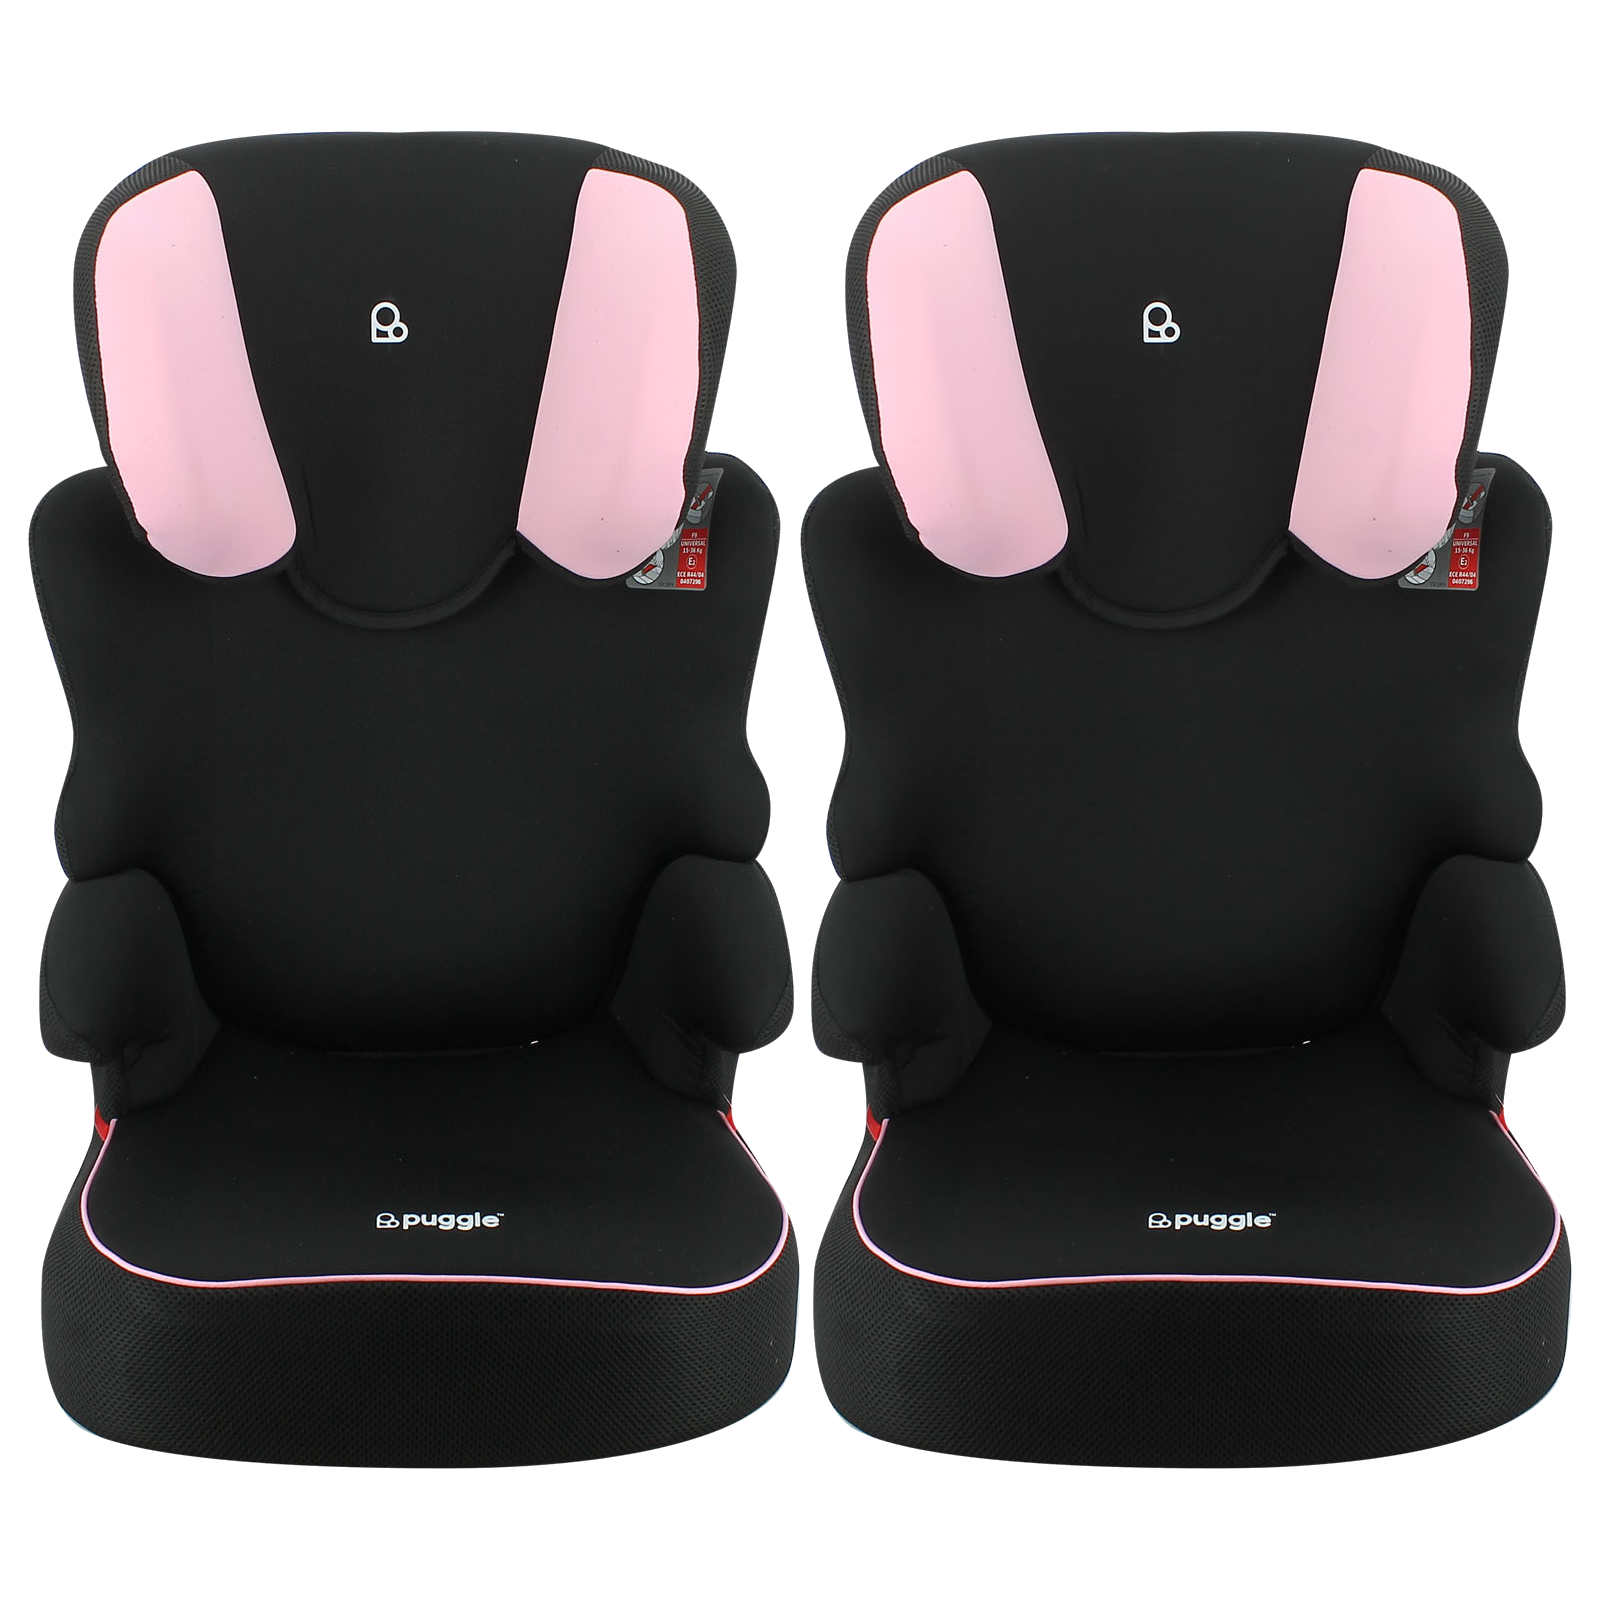 Puggle Ruxton Comfort Plus Luxe Grp 23 Car Seat - Blush Pink (2 Pack)